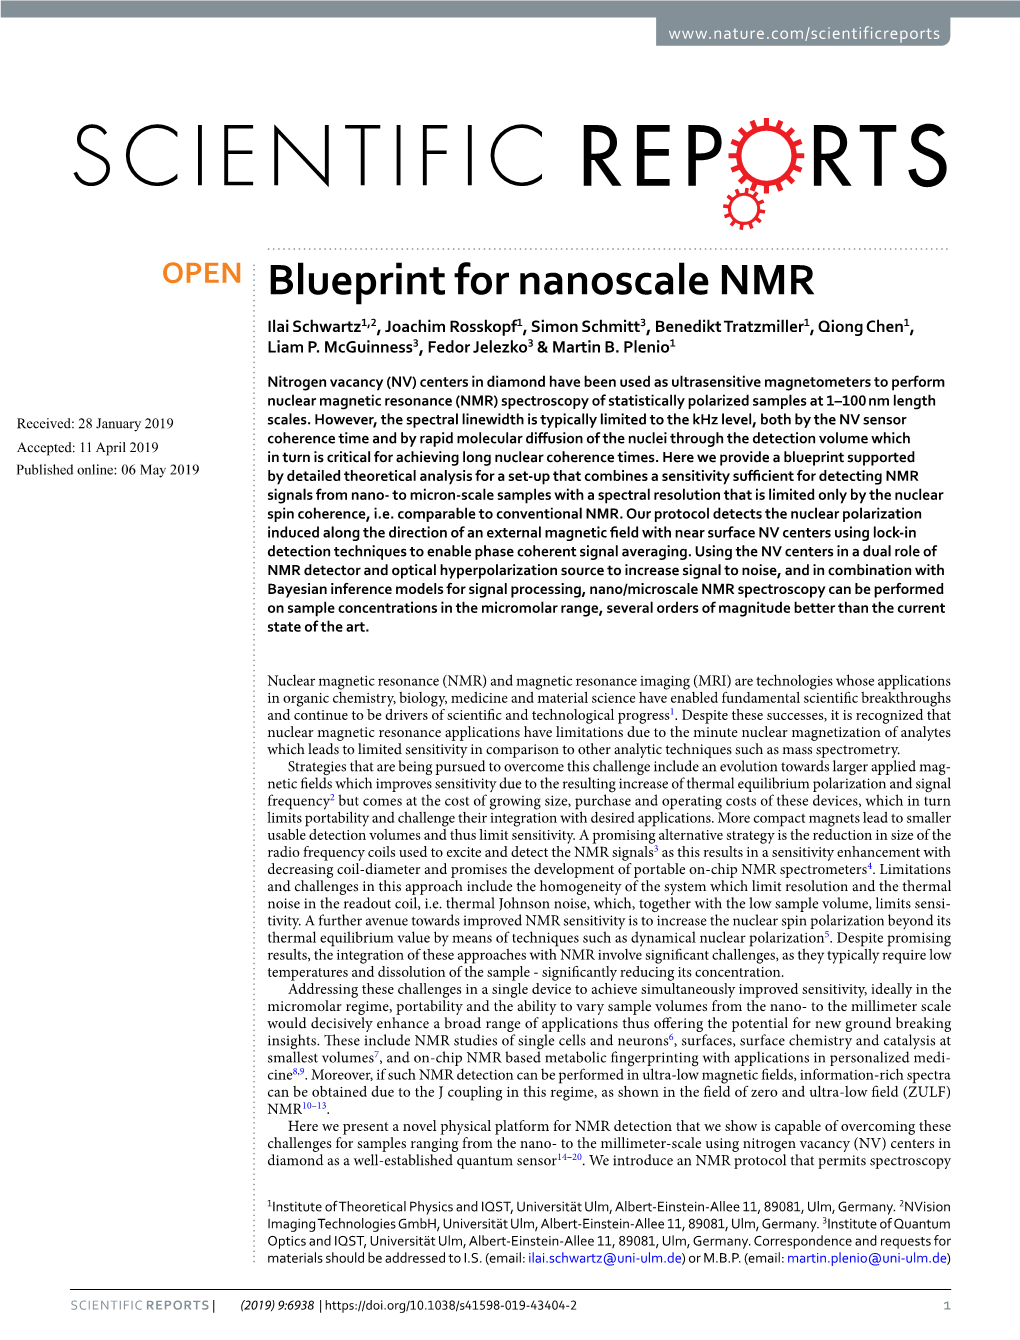 Blueprint for Nanoscale NMR Ilai Schwartz1,2, Joachim Rosskopf1, Simon Schmitt3, Benedikt Tratzmiller1, Qiong Chen1, Liam P